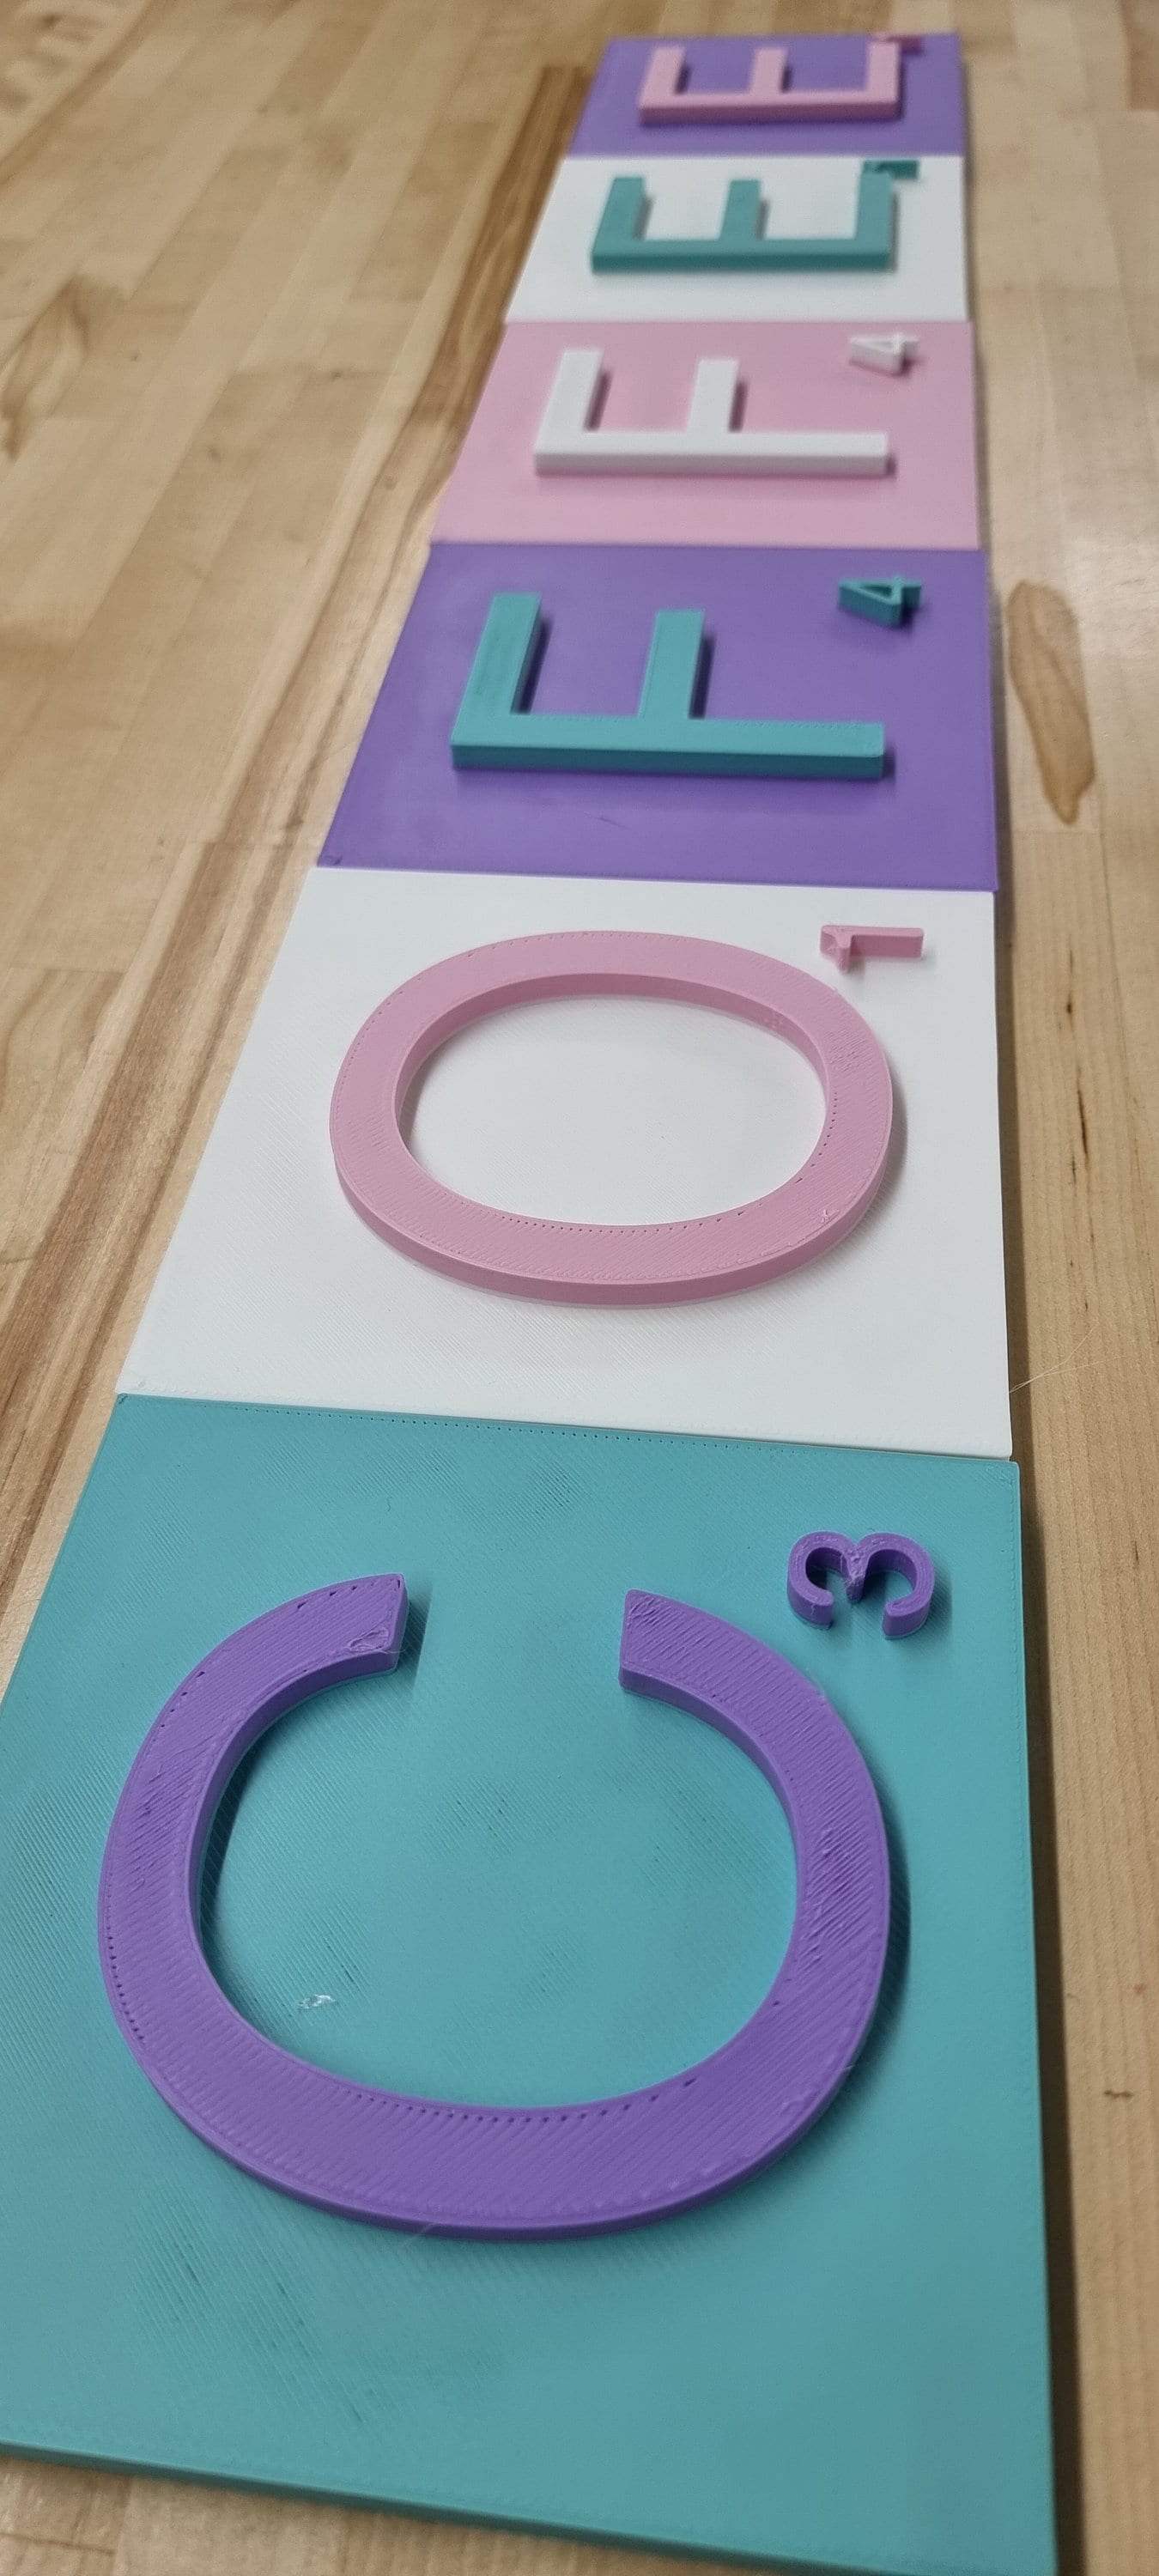 3D Effect Board Game Sign Letter Tiles - 5 Inch. Modern Look 3D Effect Sign Letter Tiles In Tons Of Colors!